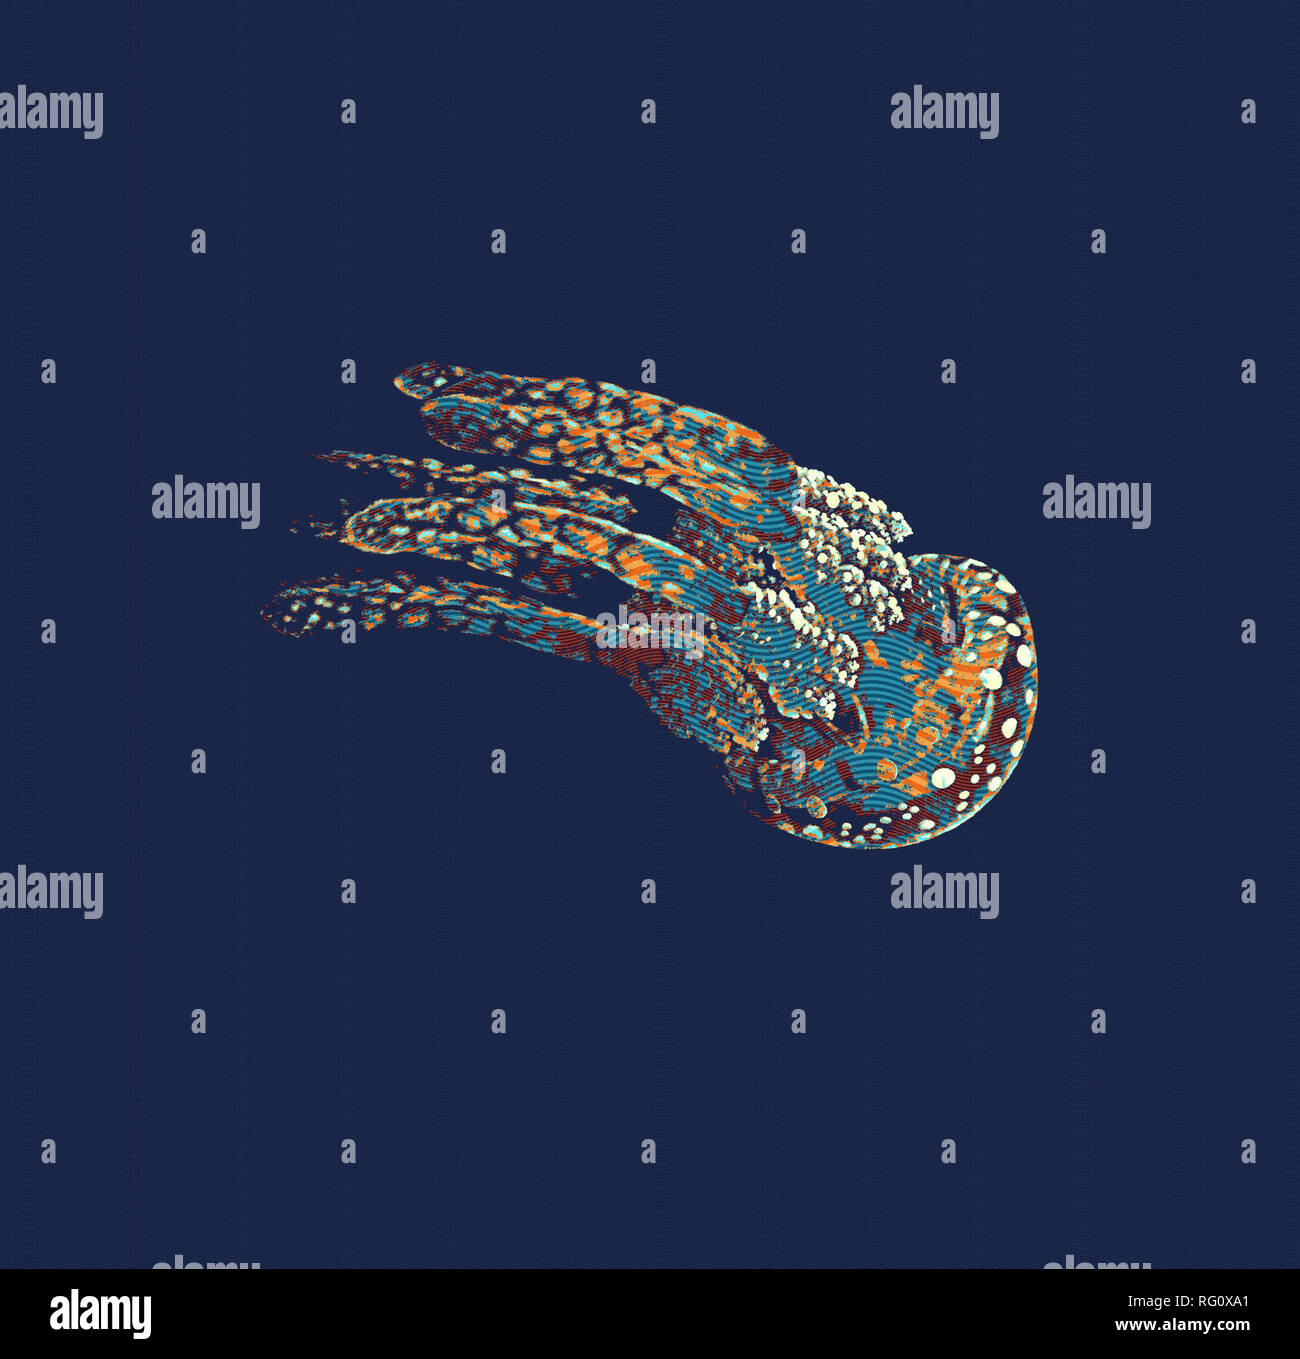 The Jelly Fish by Adam Asar.jpg - RG0XA1 Stock Photo